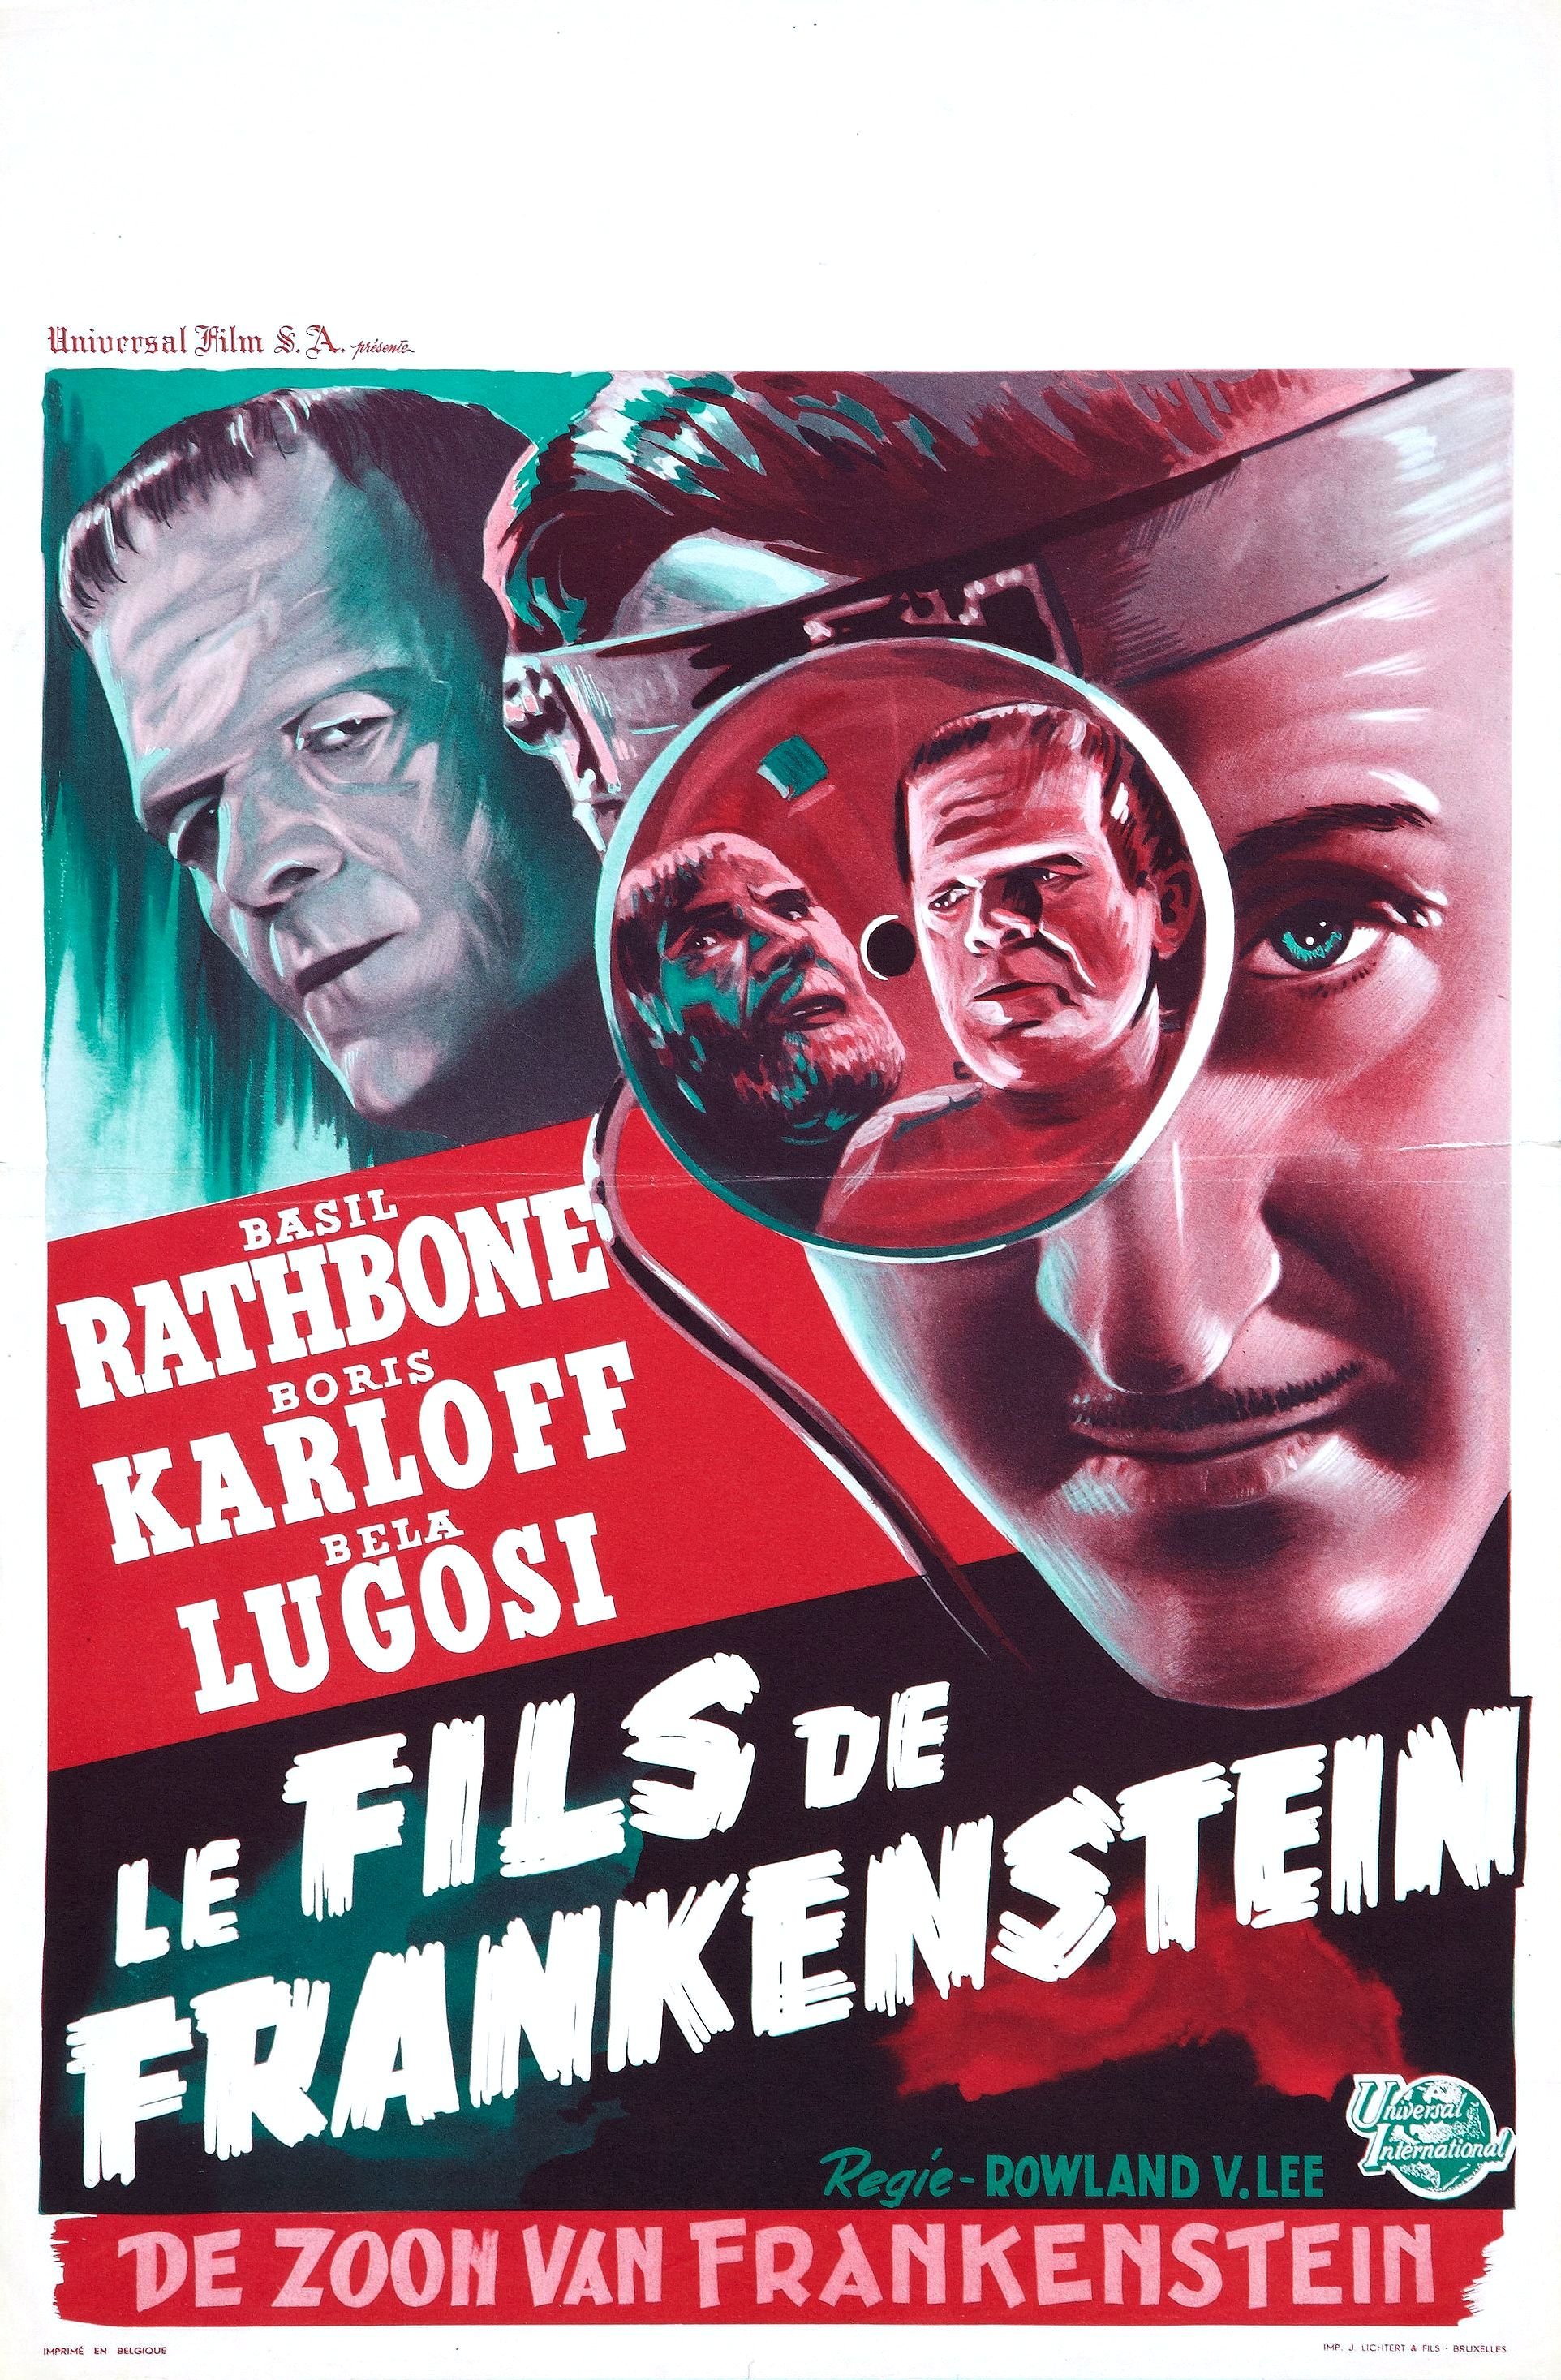 Son of Frankenstein (1939)